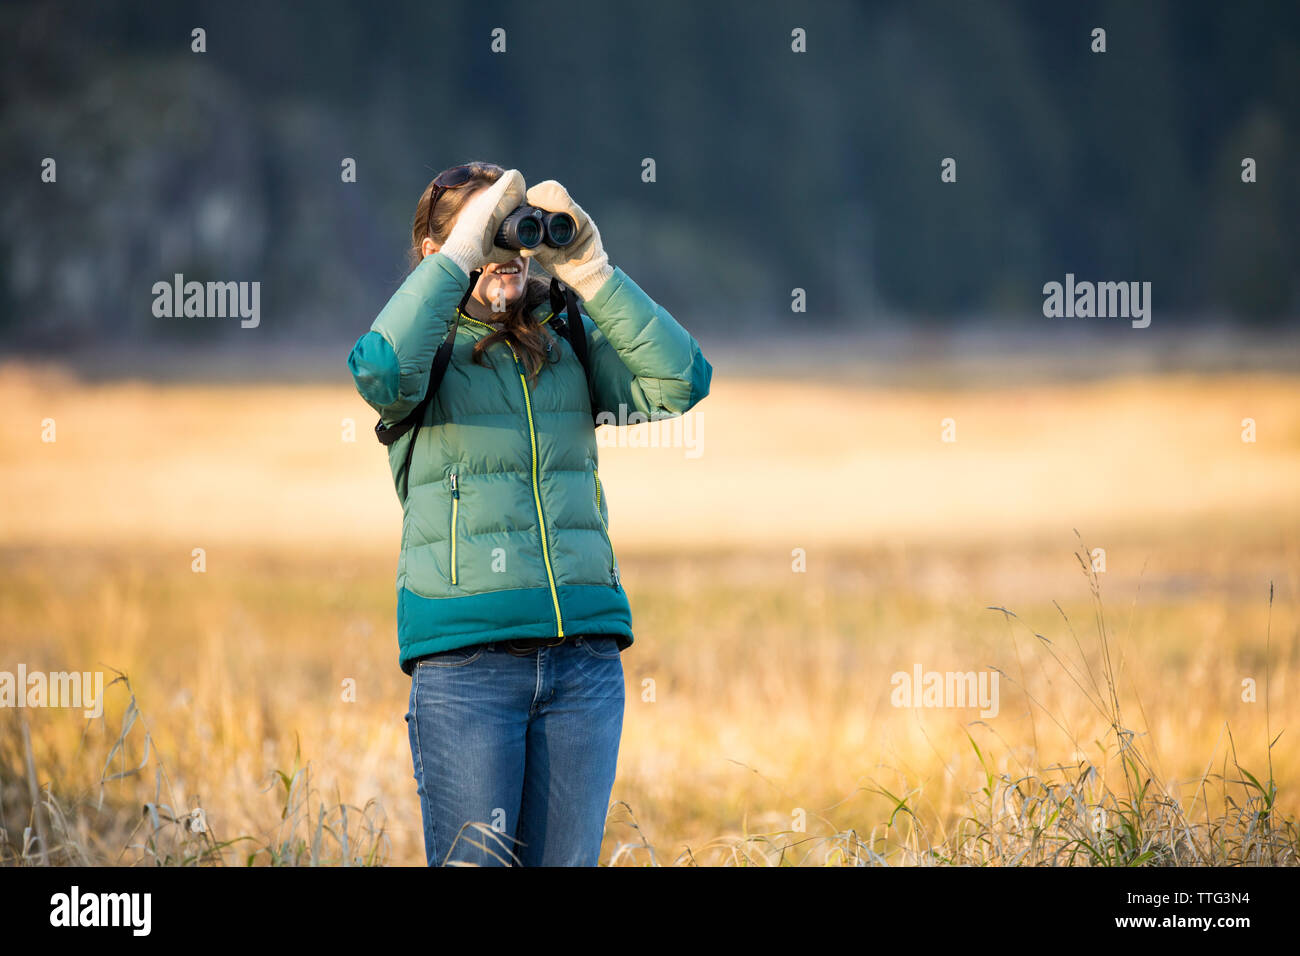 Young woman bird watching with binoculars Stock Photo